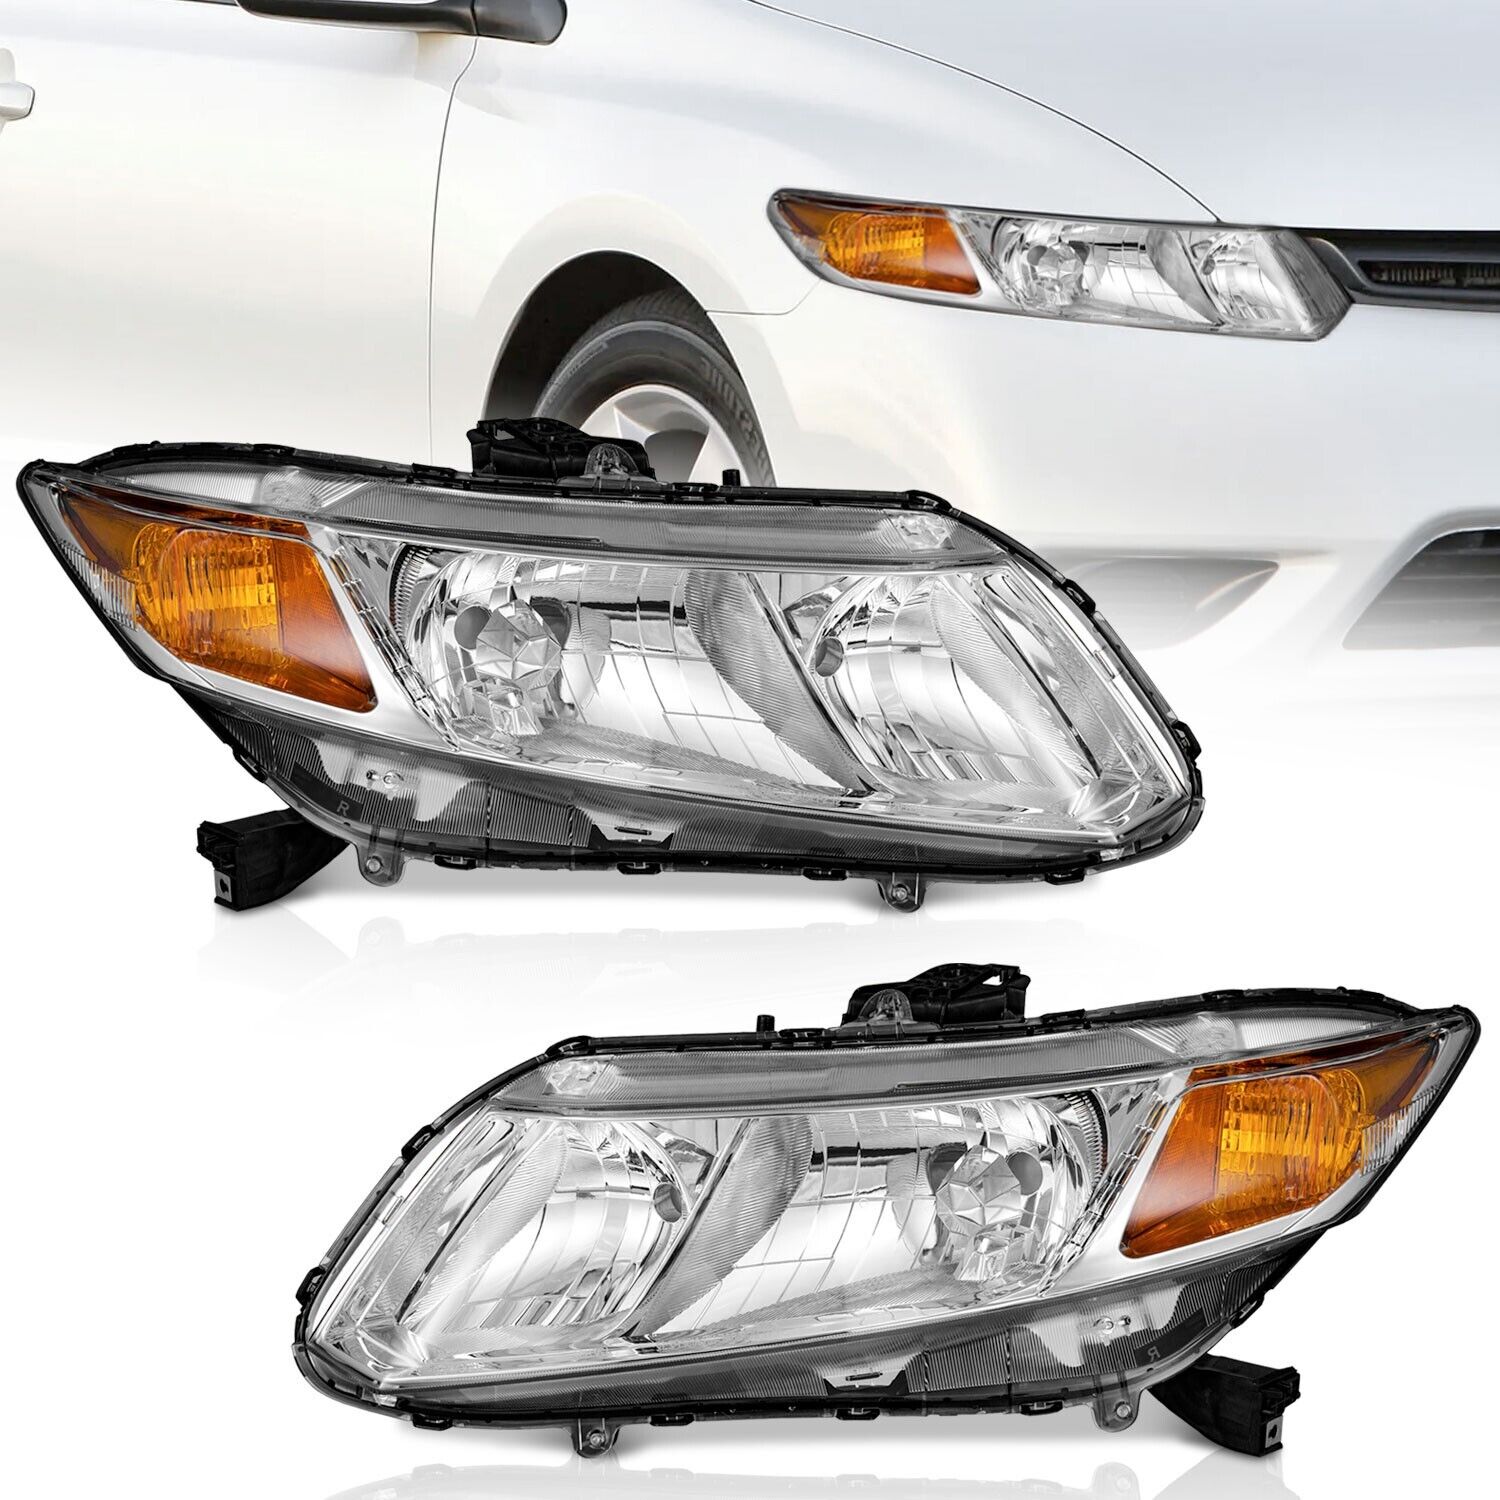 WEELMOTO Headlights For 2012-2015 Honda Civic 4-Door 4Dr Sedan 12-13 2Dr Lamps